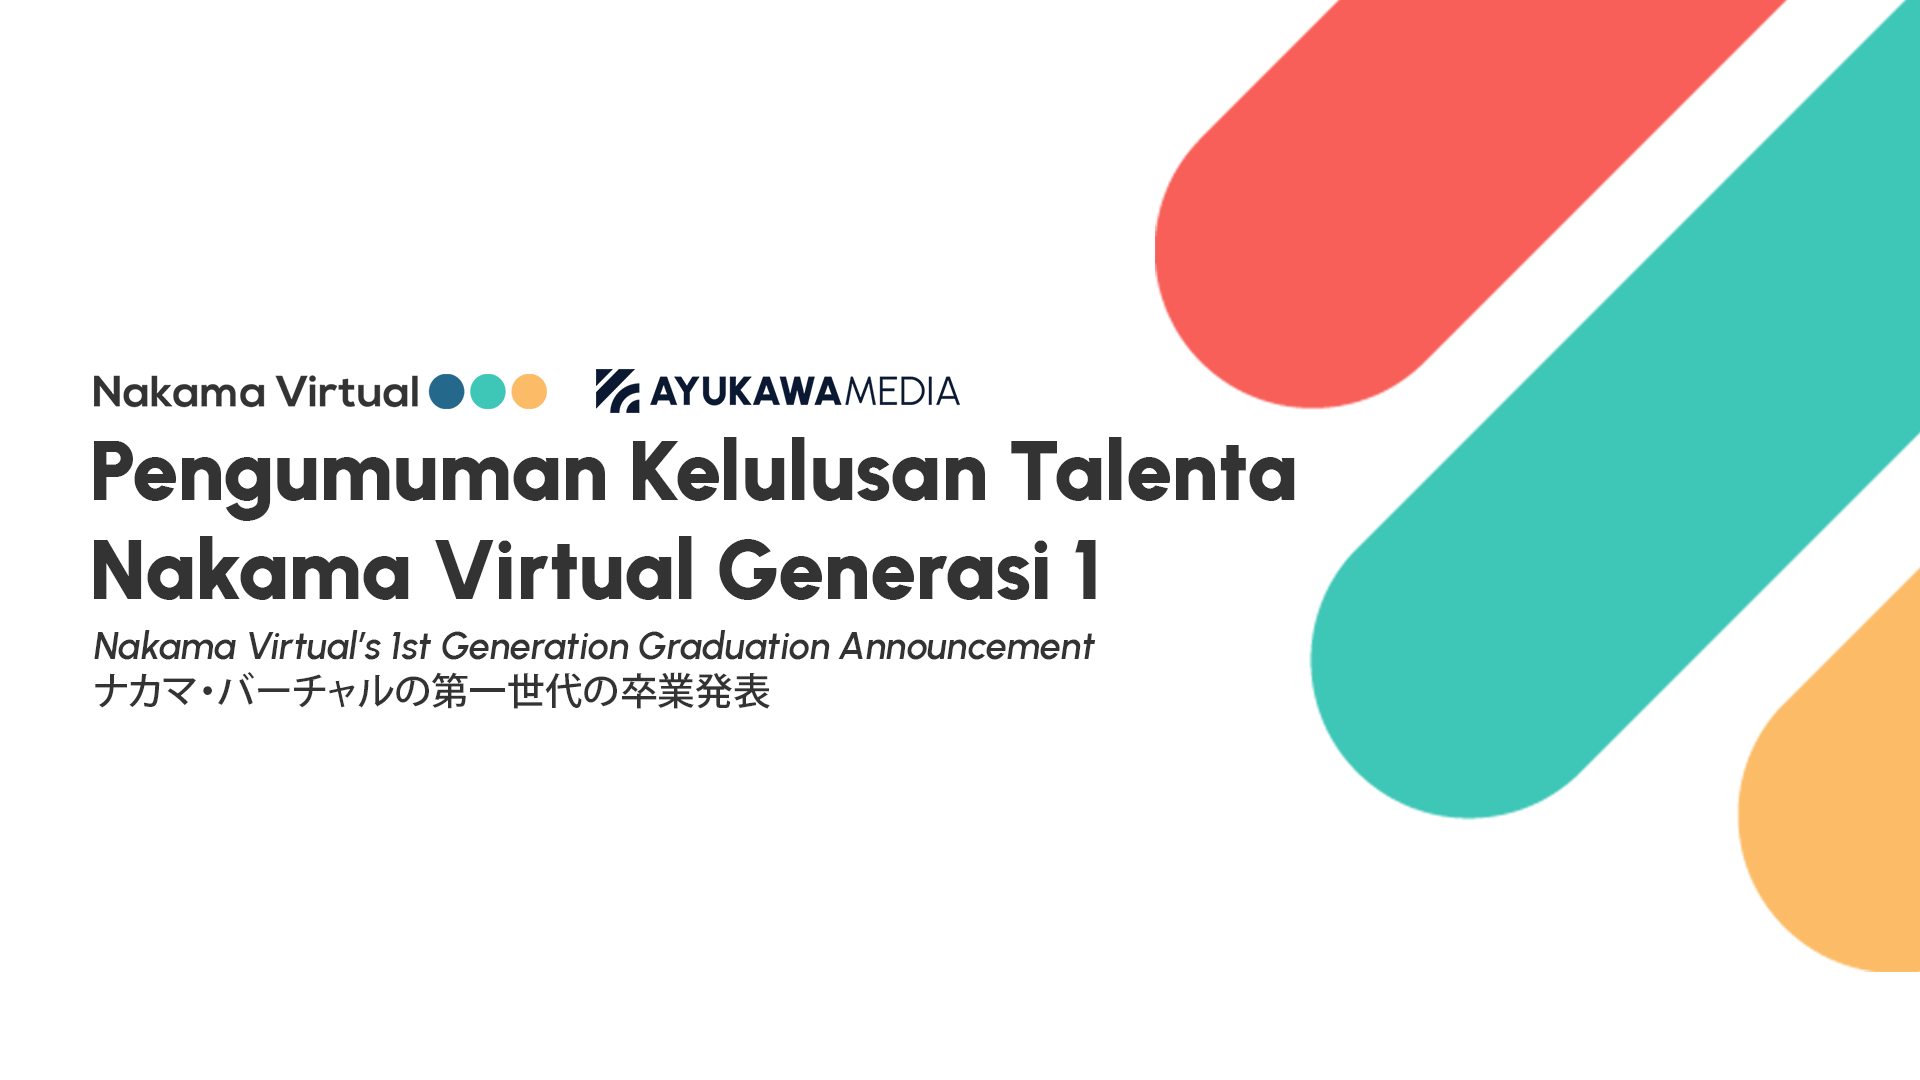 Pengumuman Kelulusan Talenta Nakama Virtual Generasi 1